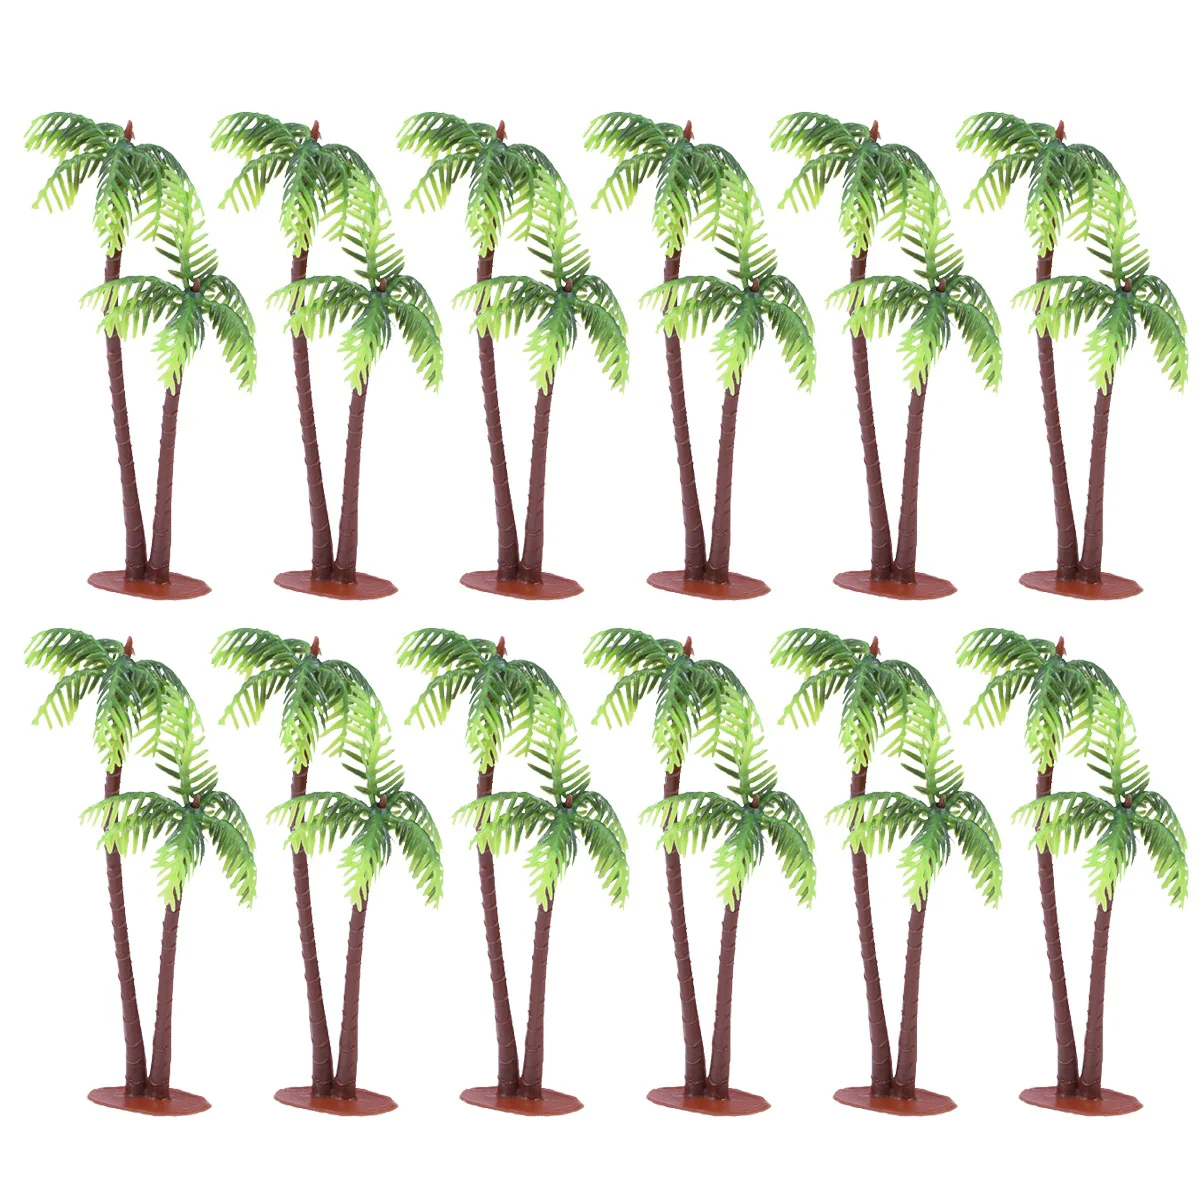 

36 Pcs Layout Props Scenery Coconut Tree Model Mini Trains Landscape Trees Fish Tank Decorations Scale Palm